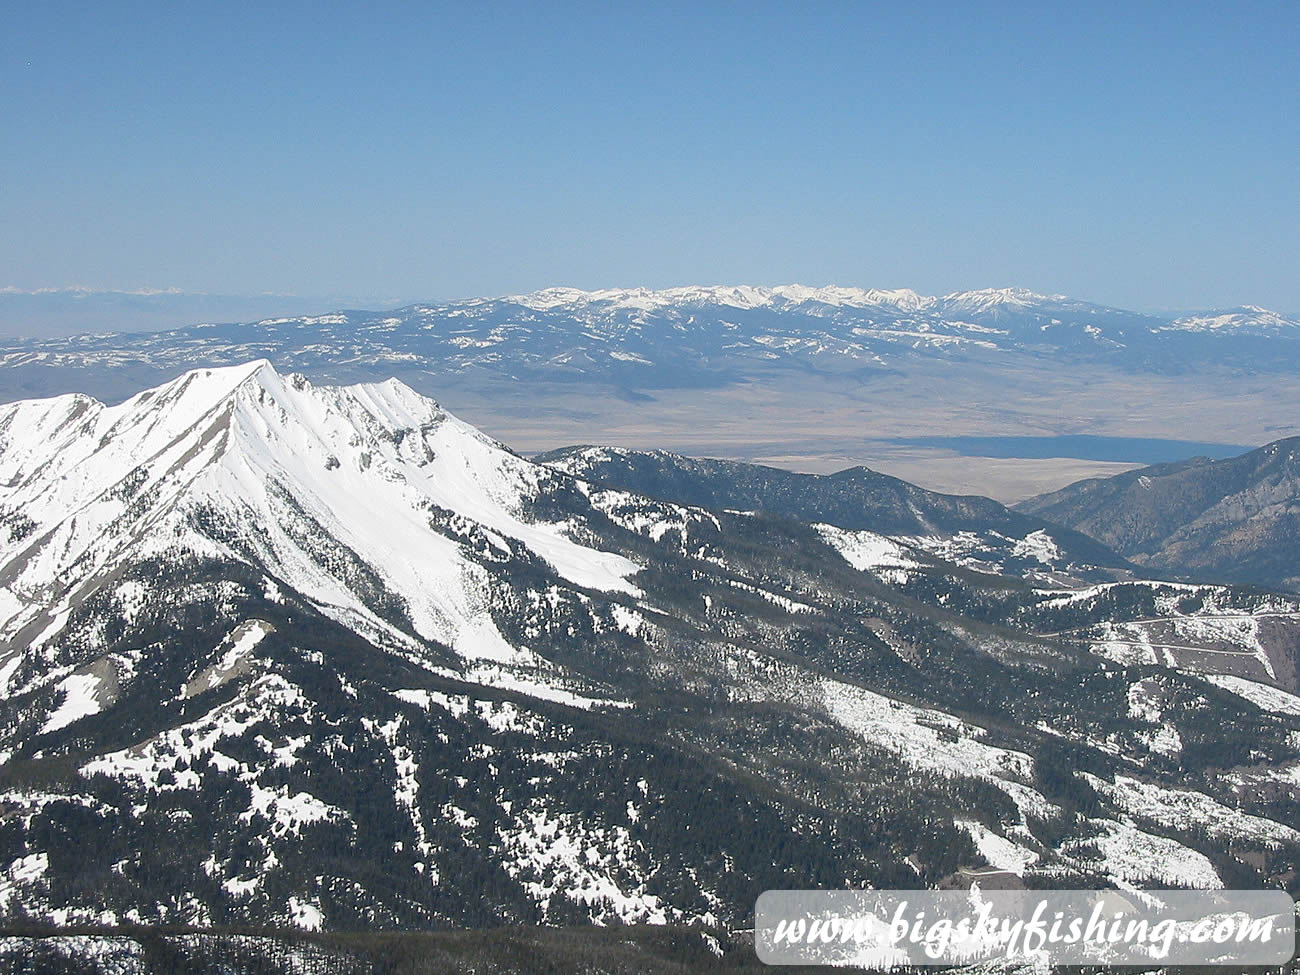 View from Lone Peak Summit